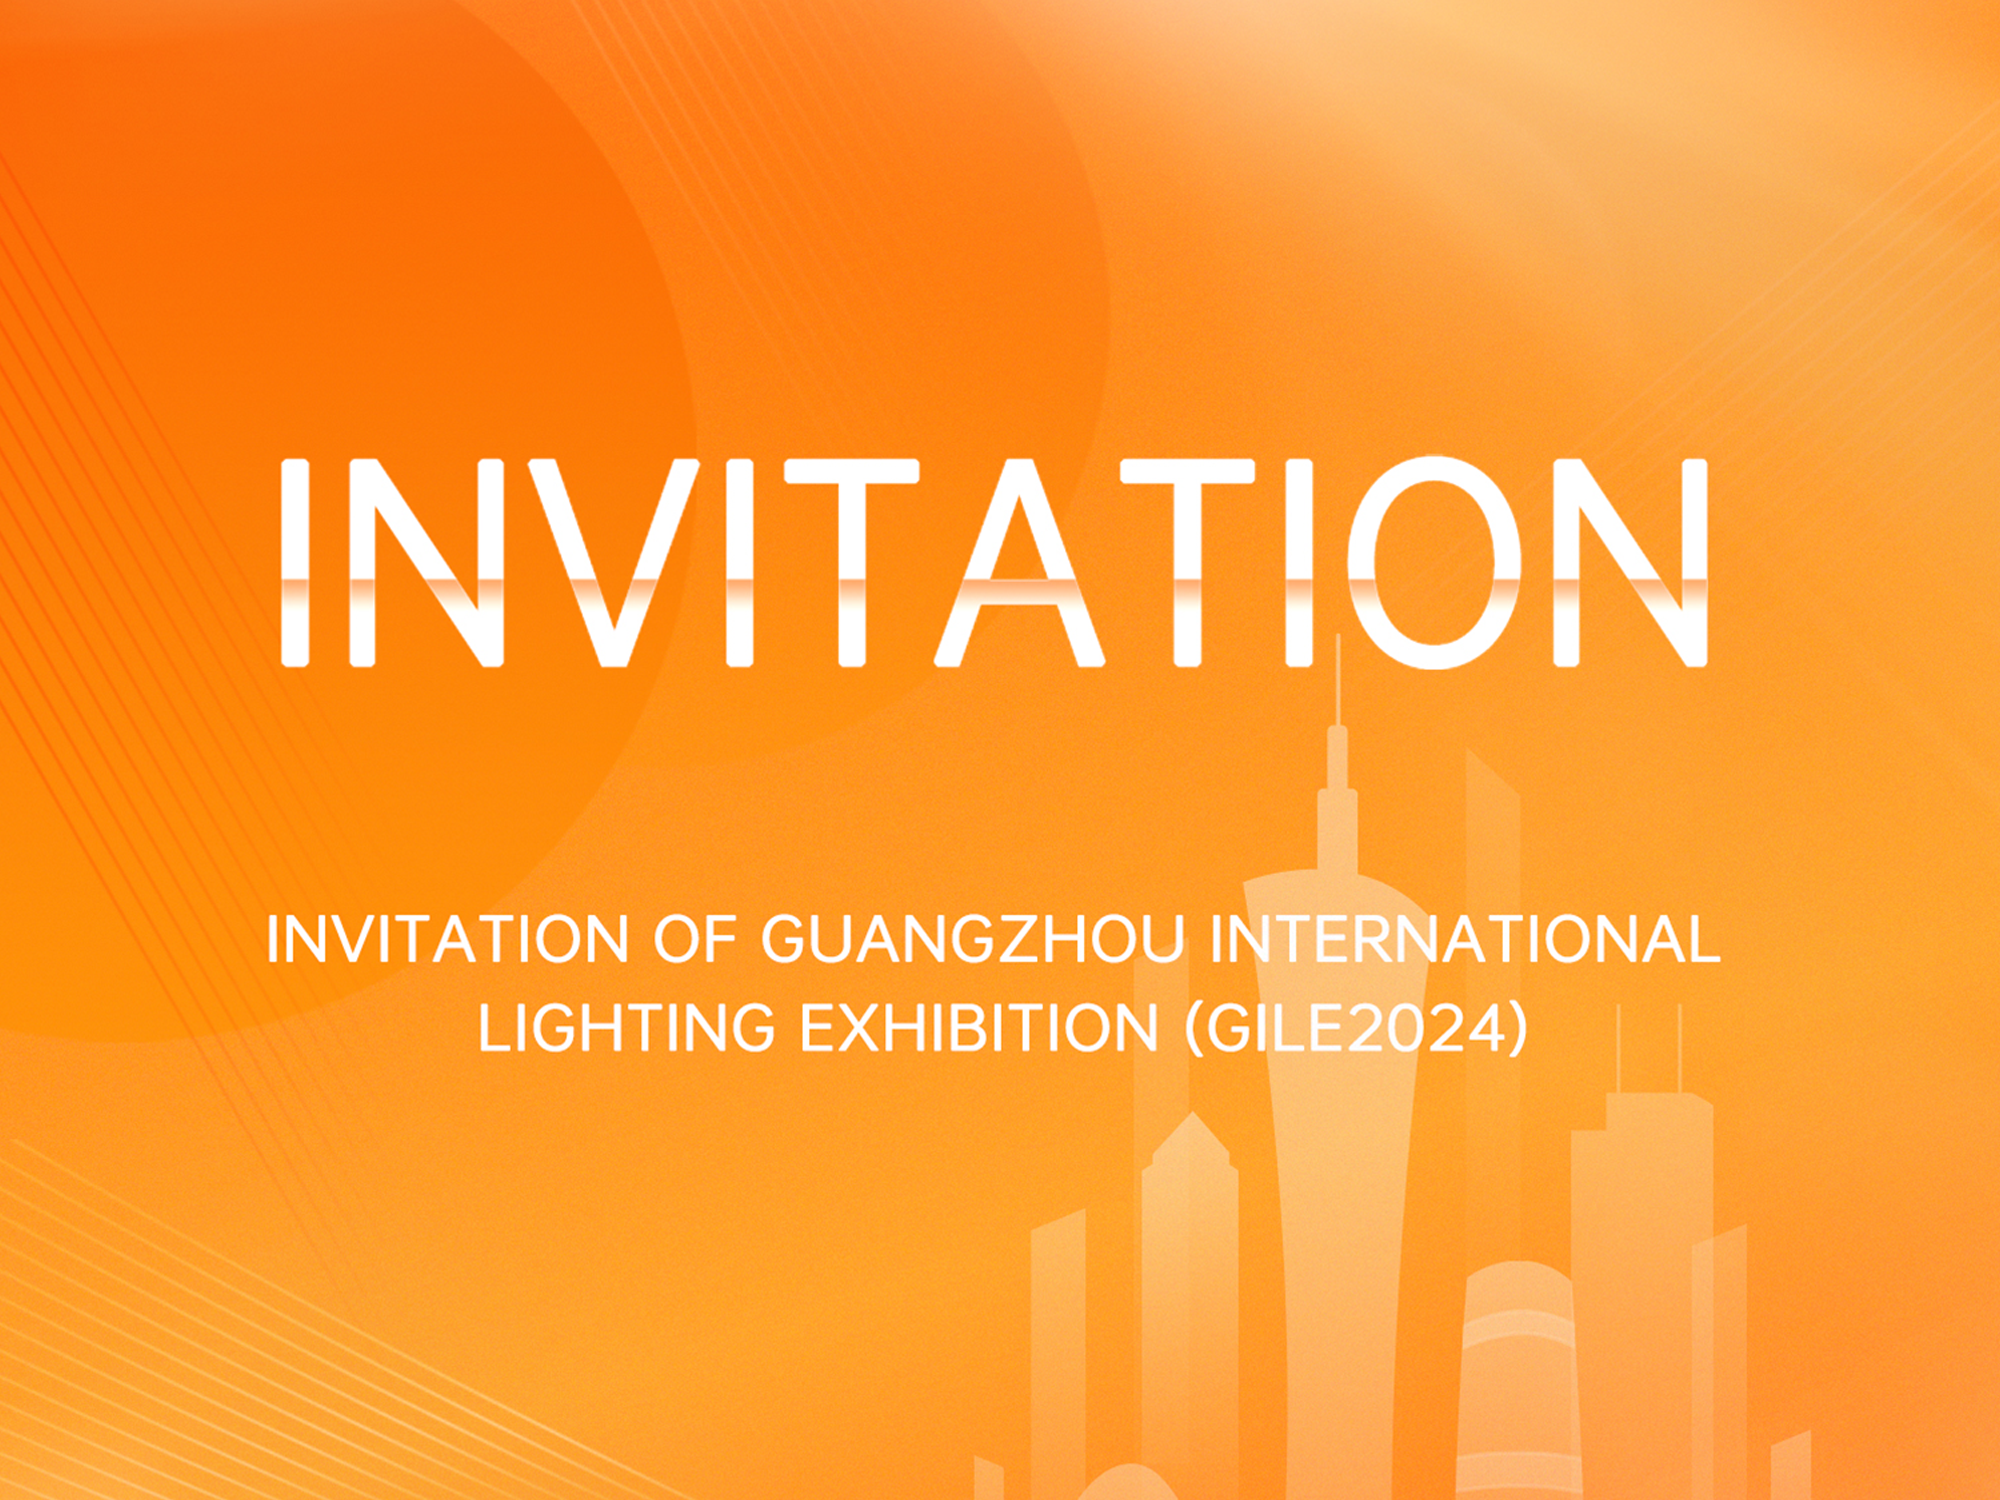 Invitation of Guangzhou International Lighting Exhibition (GILE 2024)